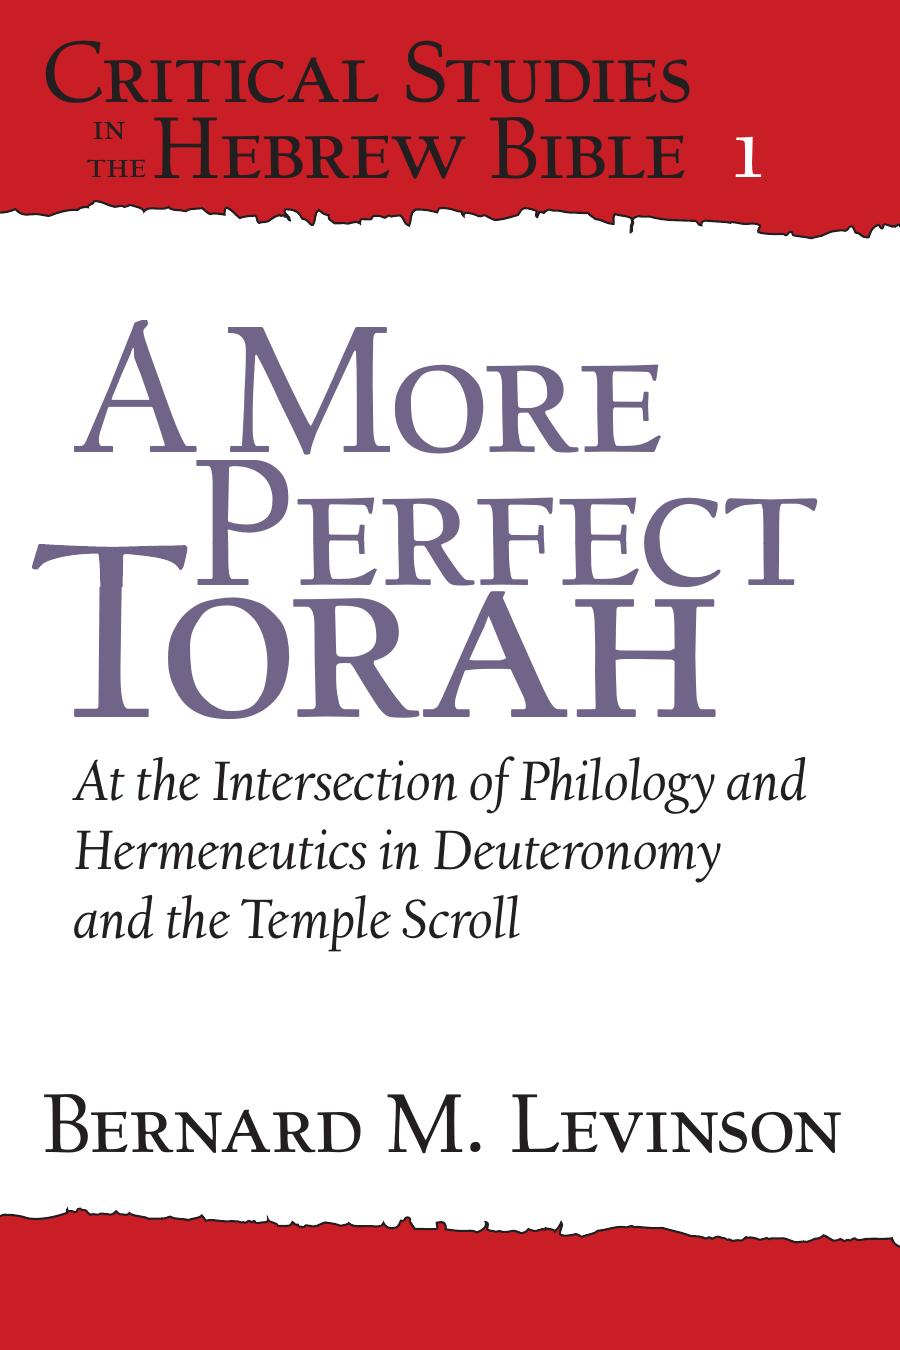 A More Perfect Torah by Bernard M. Levinson